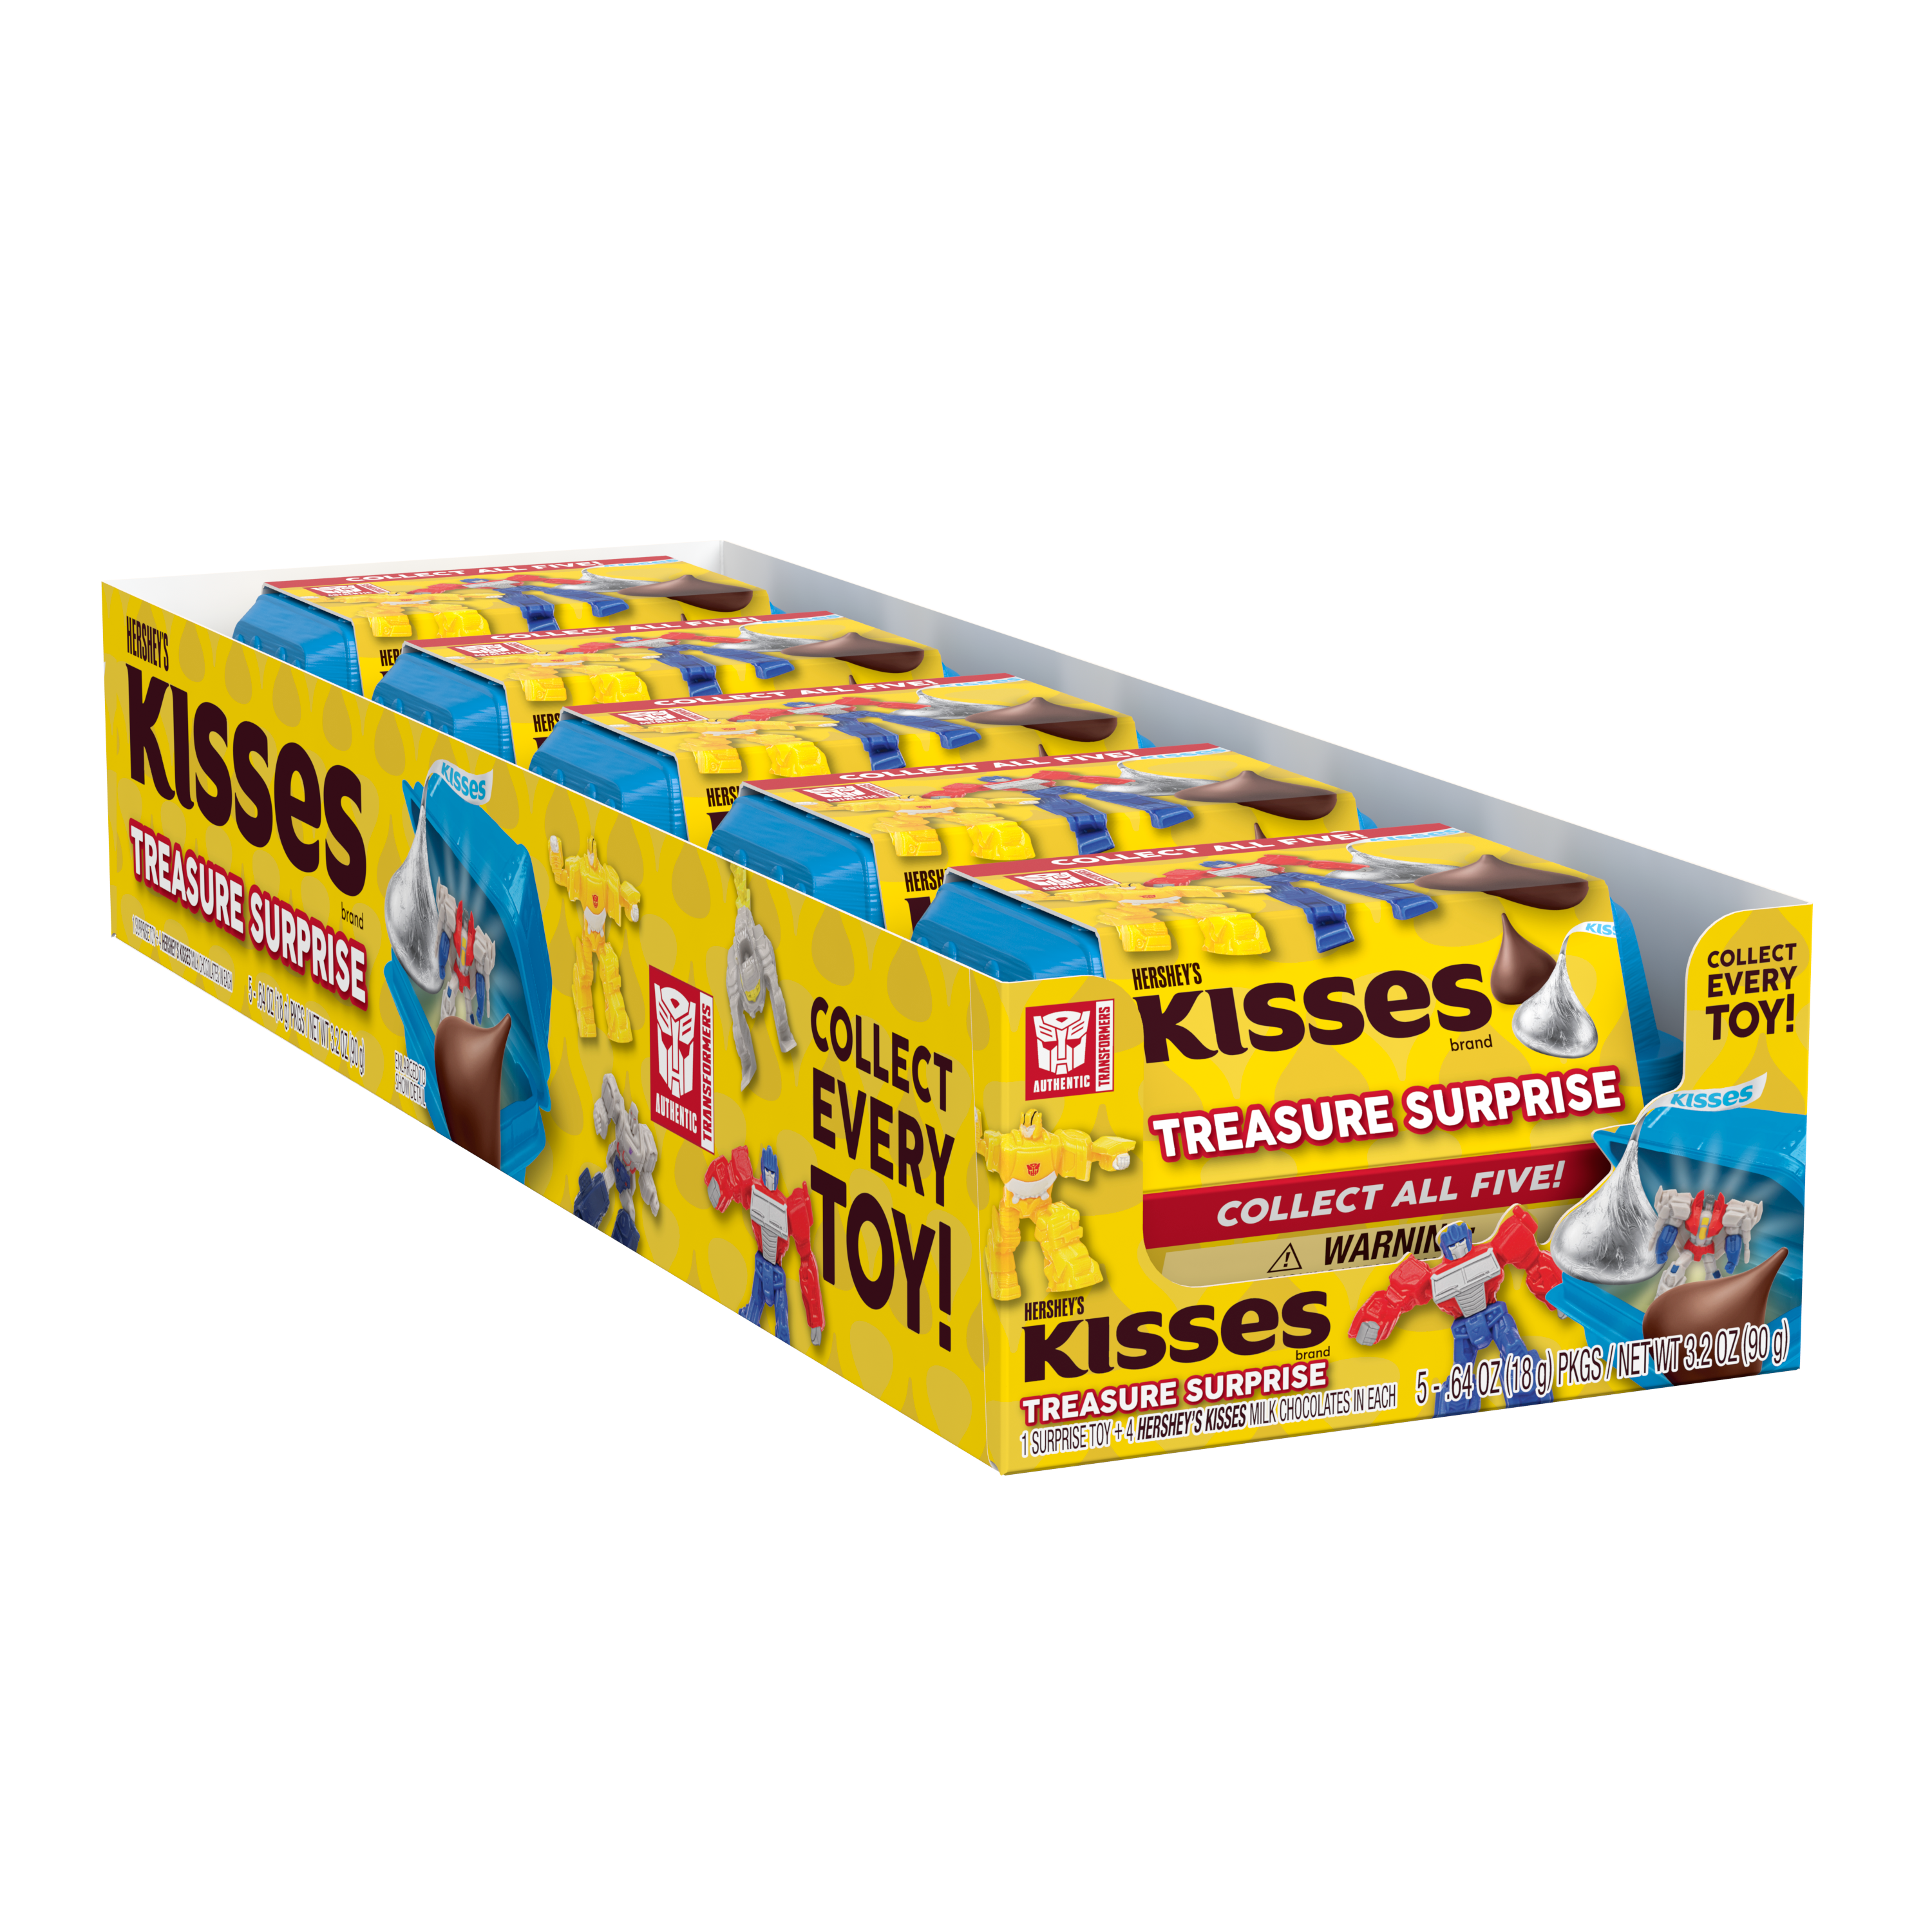 HERSHEY'S KISSES Transformers Milk Chocolate Treasure Surprise, 3.2 oz box, 5 pack - Left Side of Package